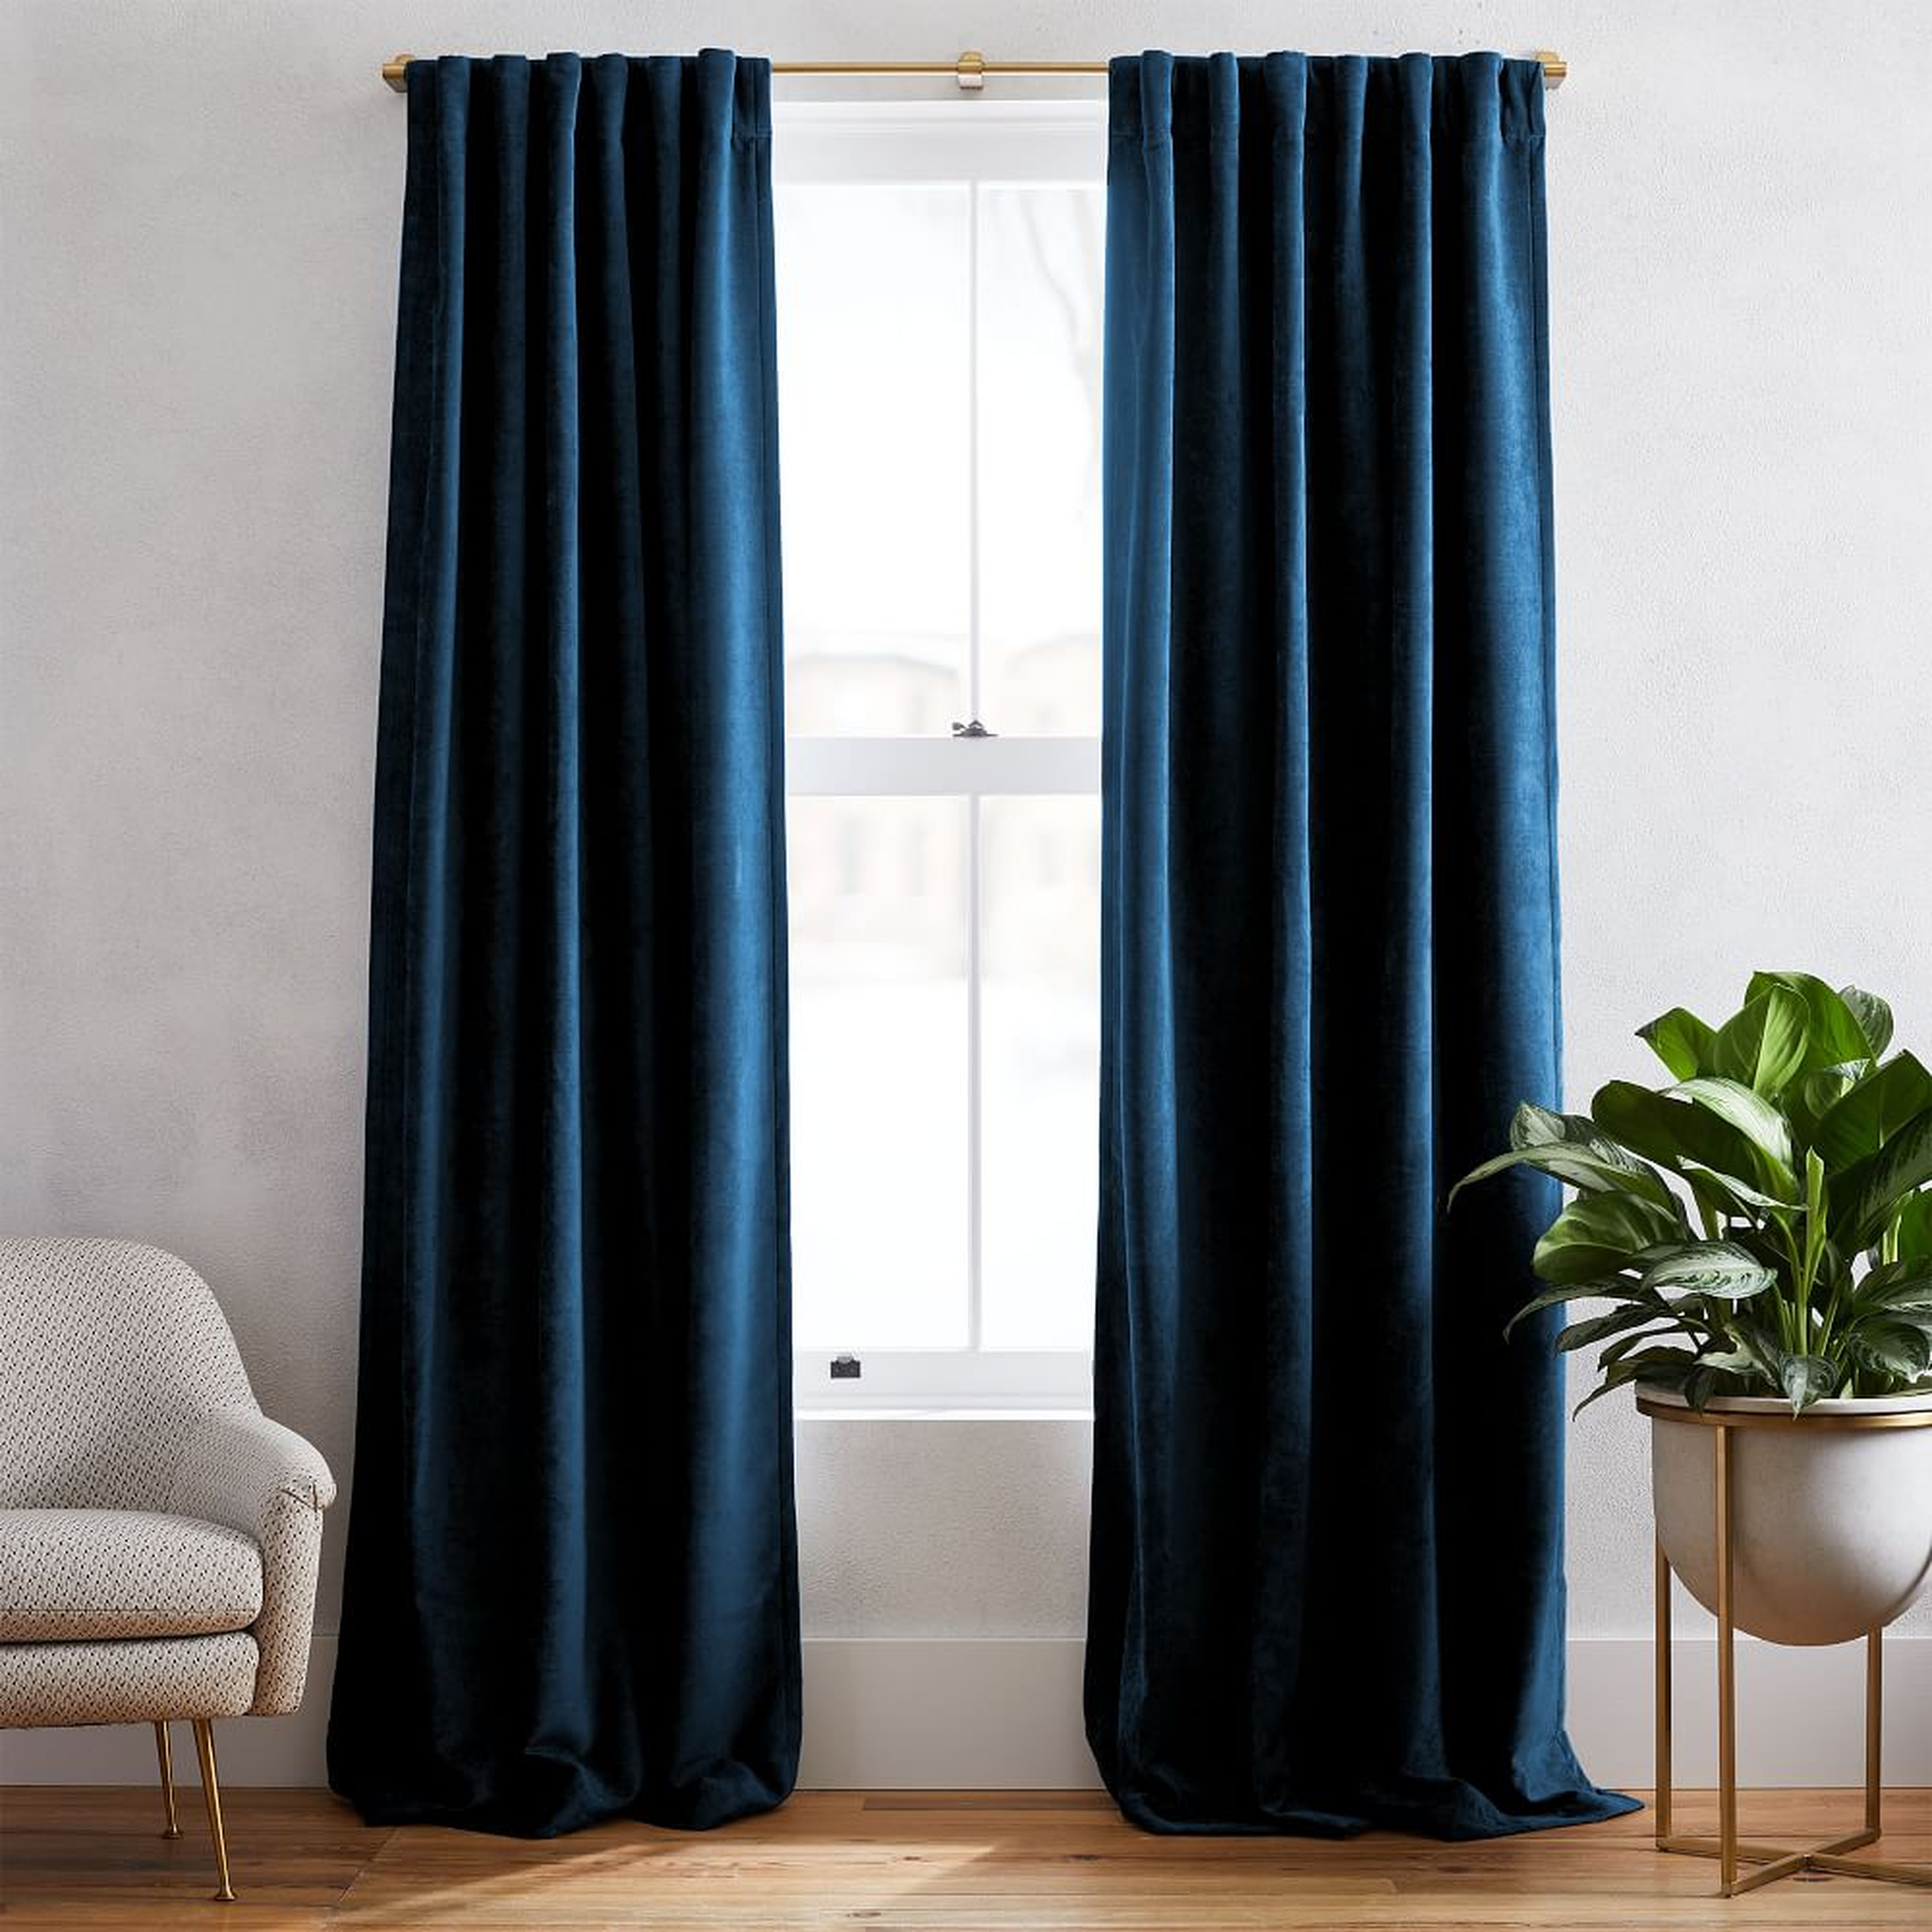 Worn Velvet Curtain with Cotton Lining, Regal Blue, 48"x96" - West Elm